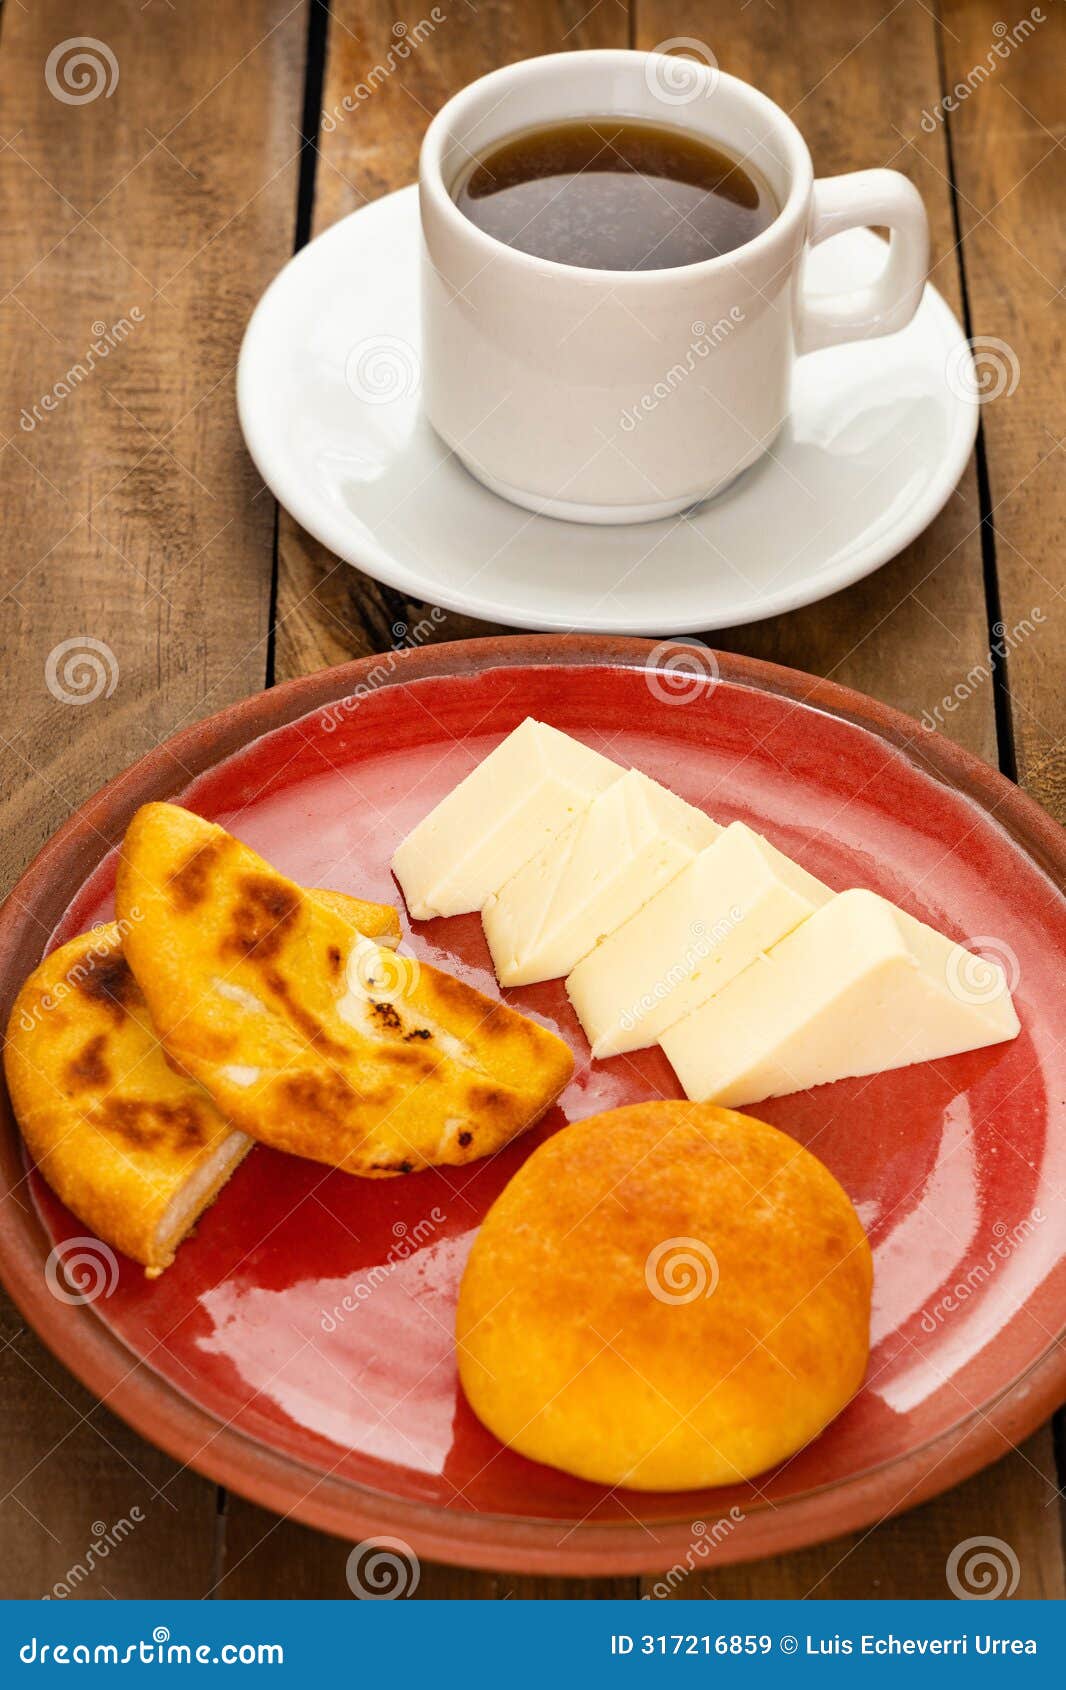 boyacense arepa for breakfast, accompanied with cheese, almojabana and aguapanela